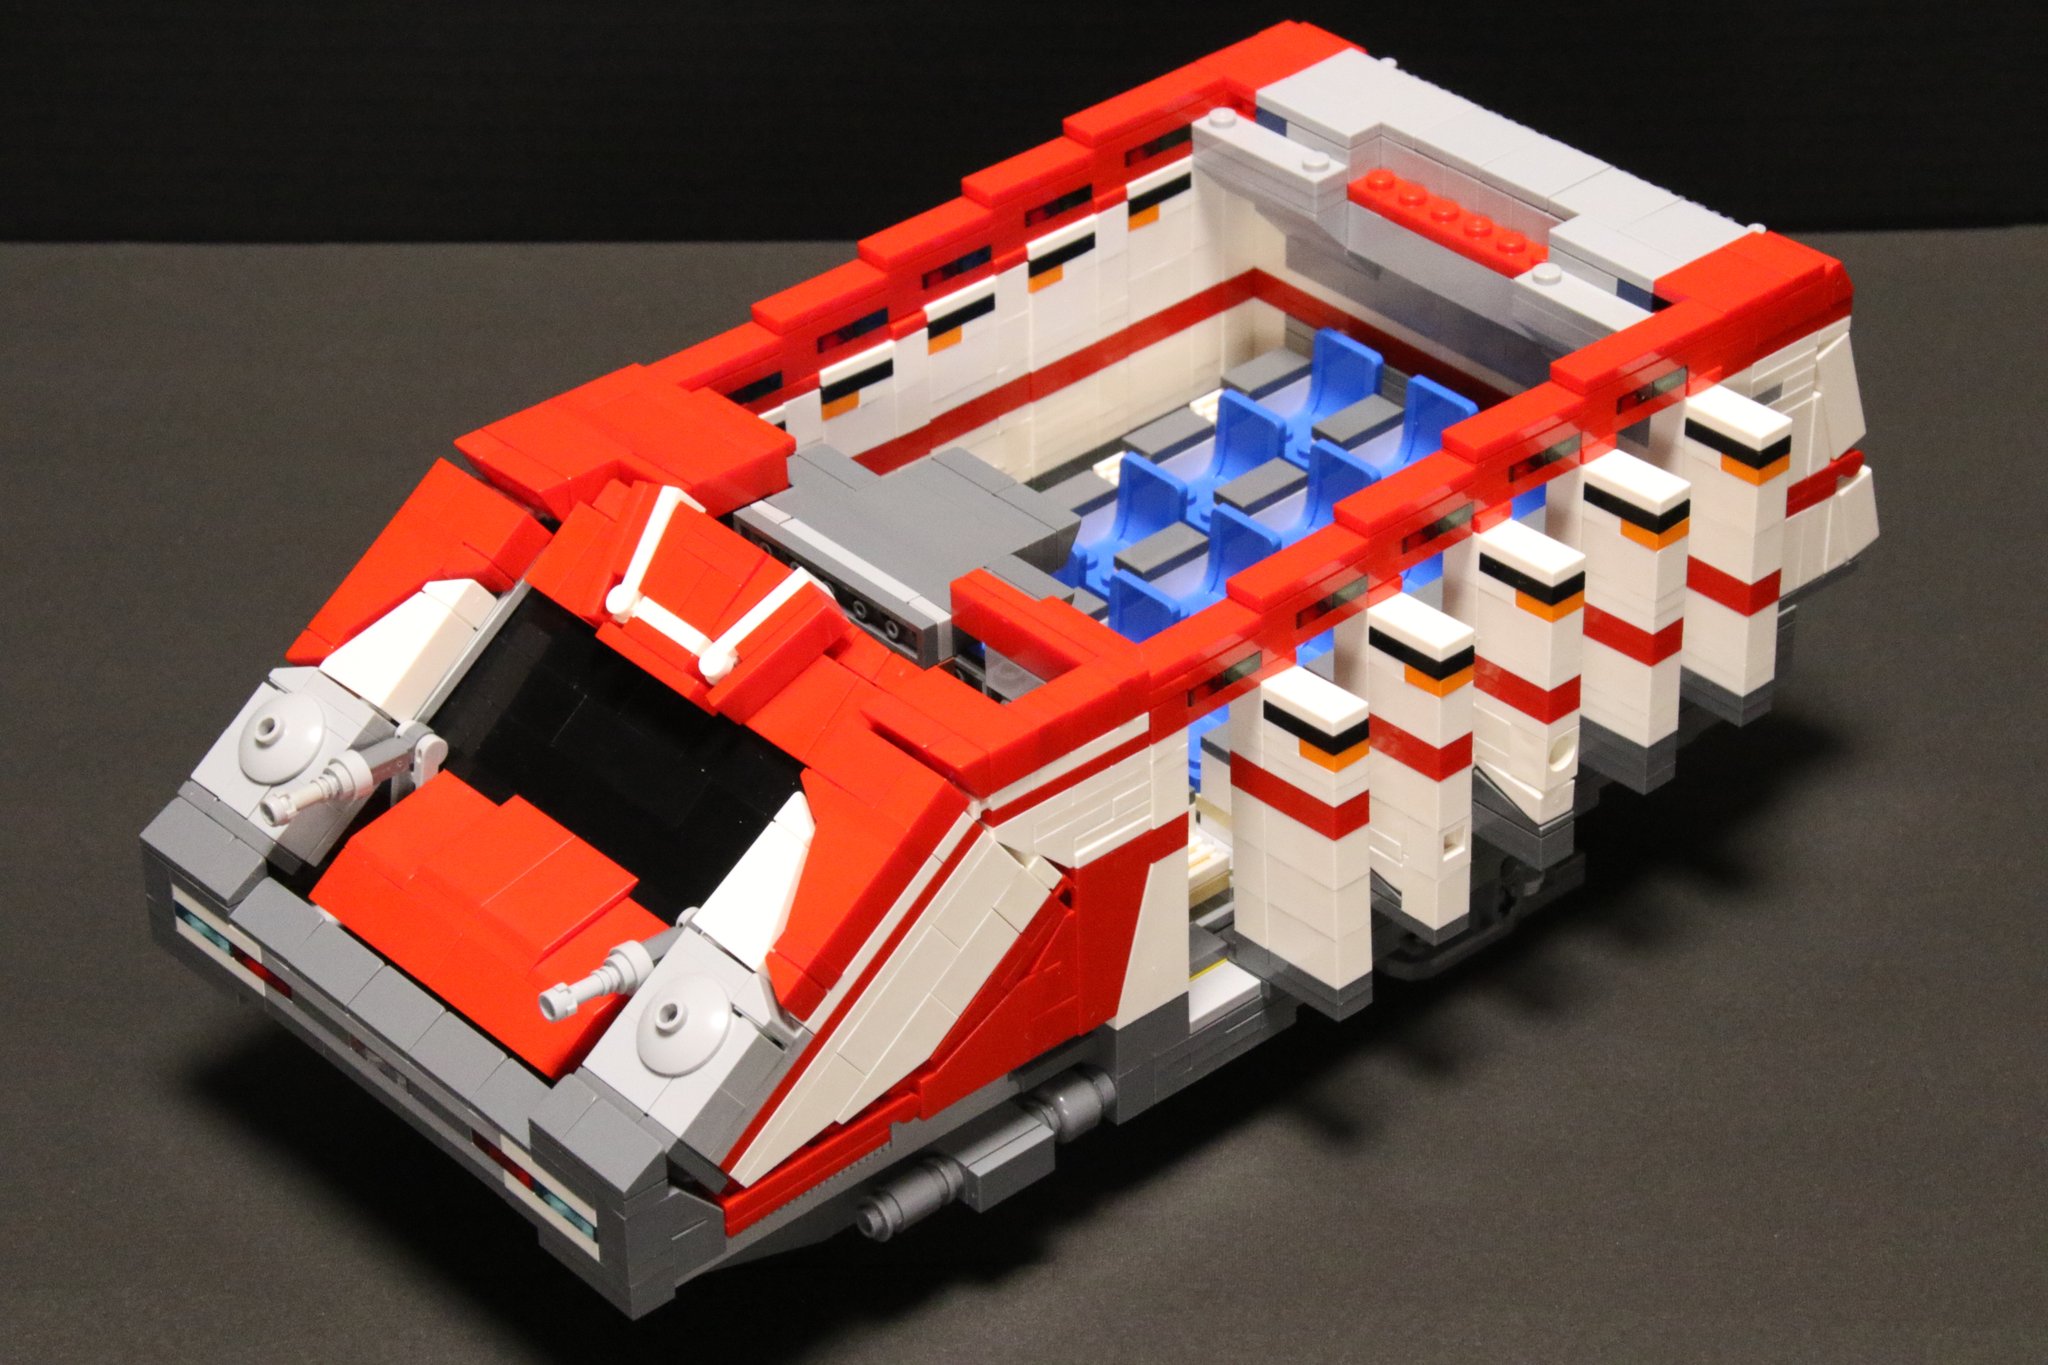 U Wing Pilot on X: "レゴでスタースピーダーを作りました！ 人